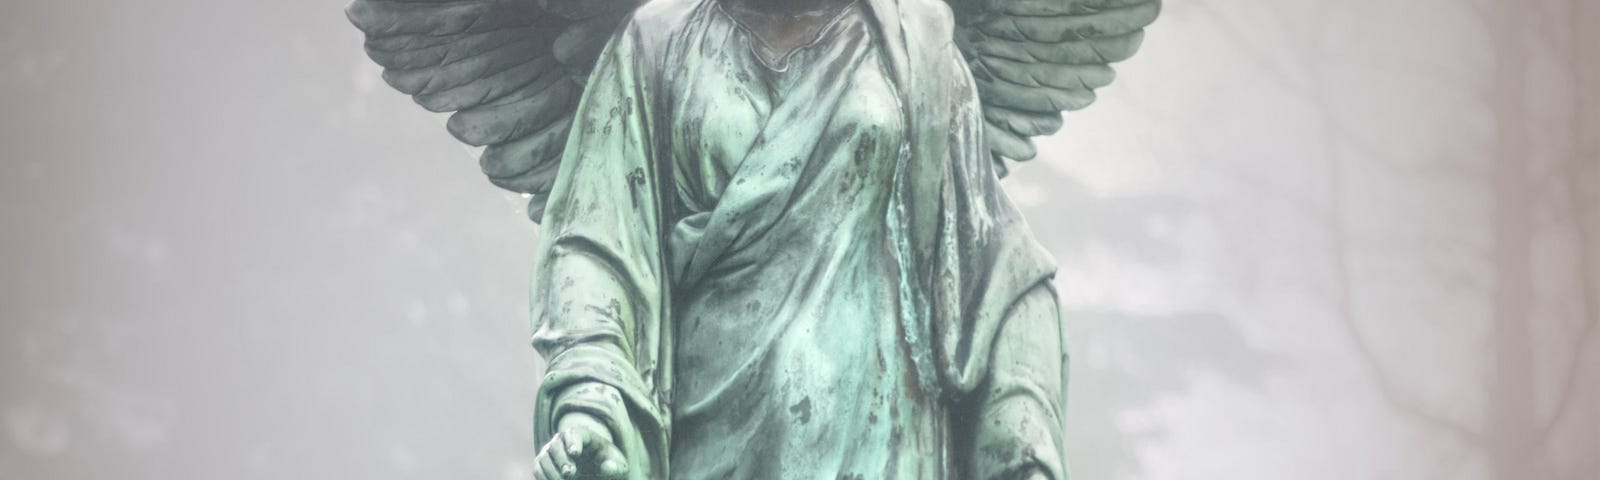 statue of angel on pedestal